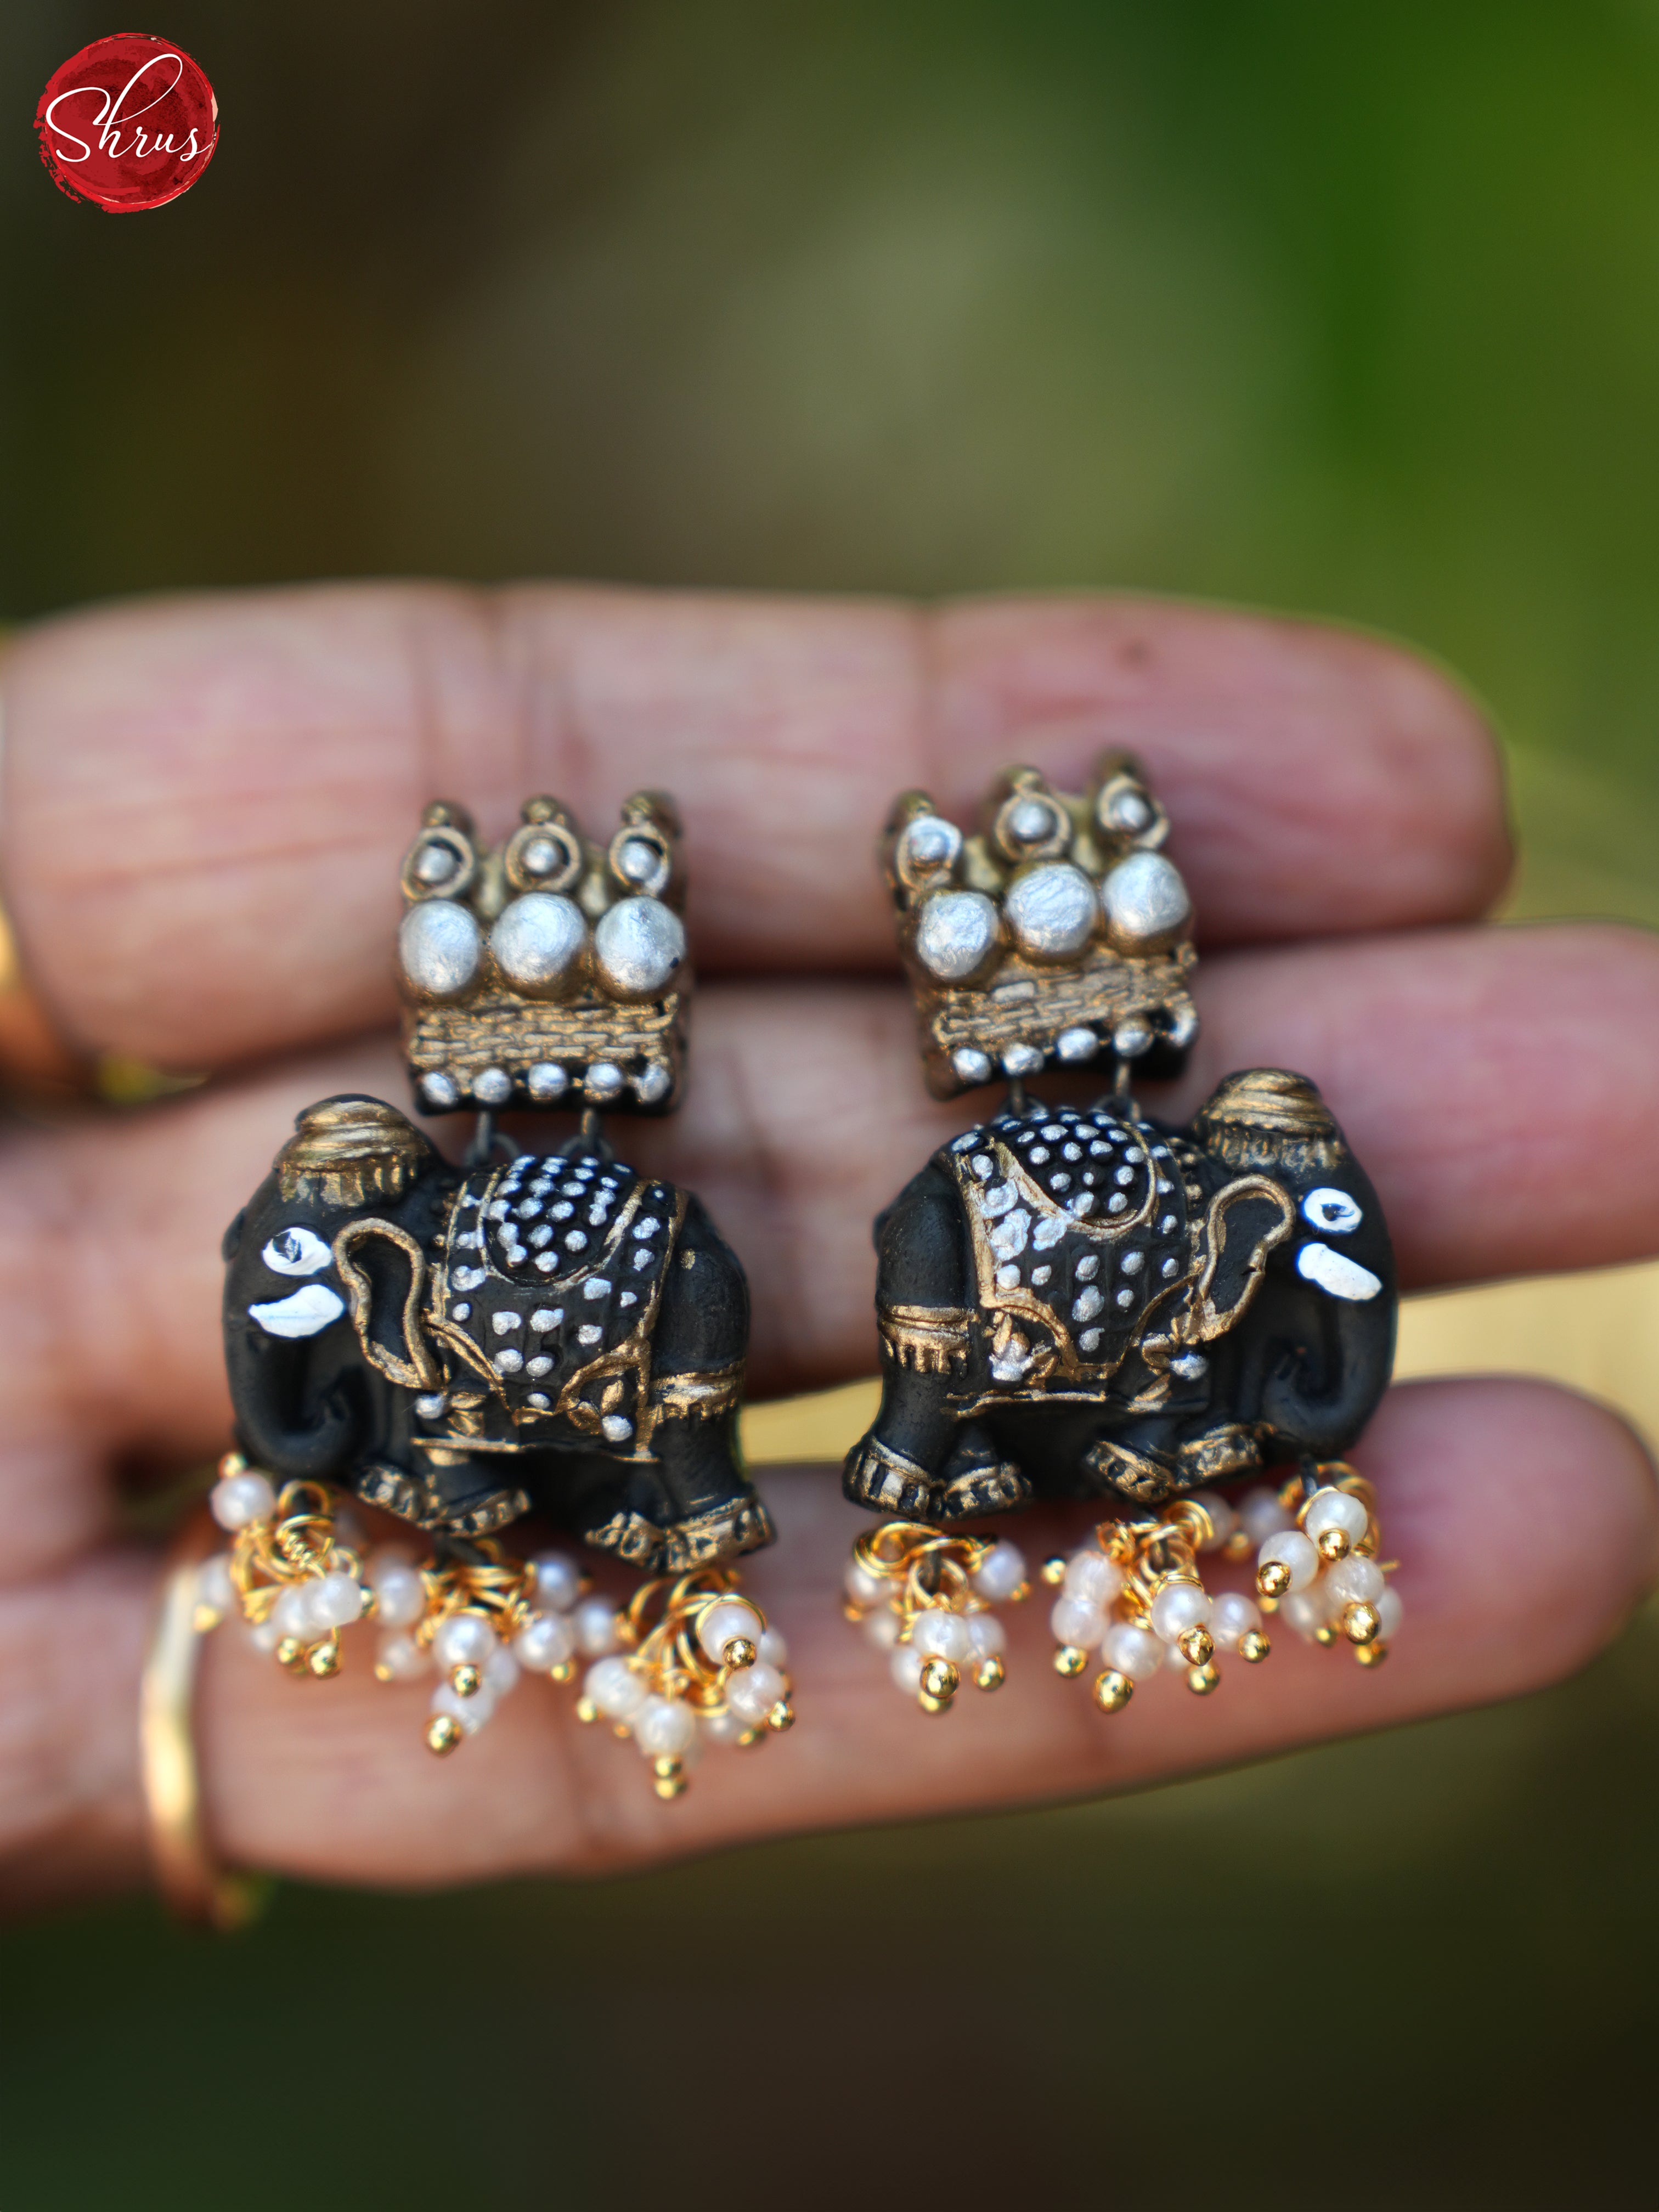 Elephant terra cotta pendant   - Neck Piece & Earrings - Shop on ShrusEternity.com